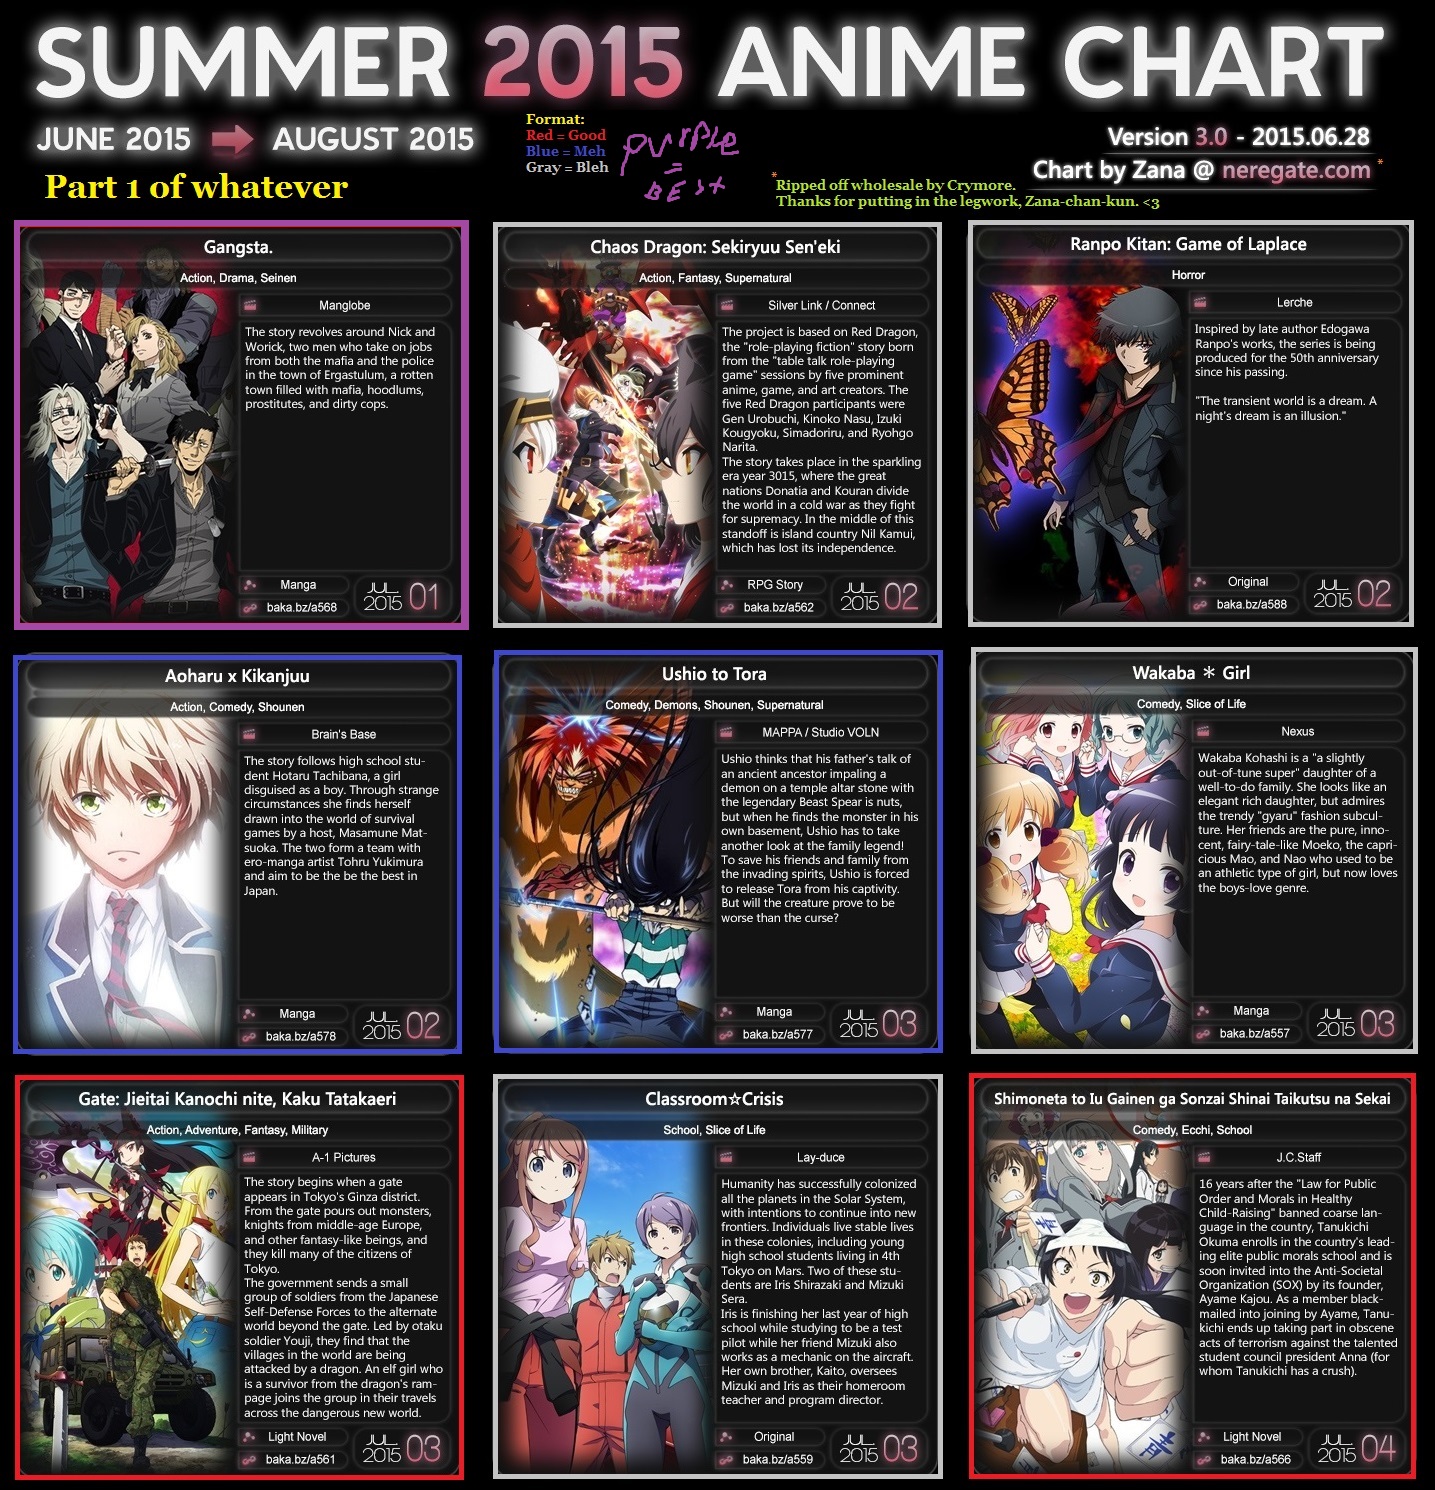 Summer 2015 Anime Chart - All